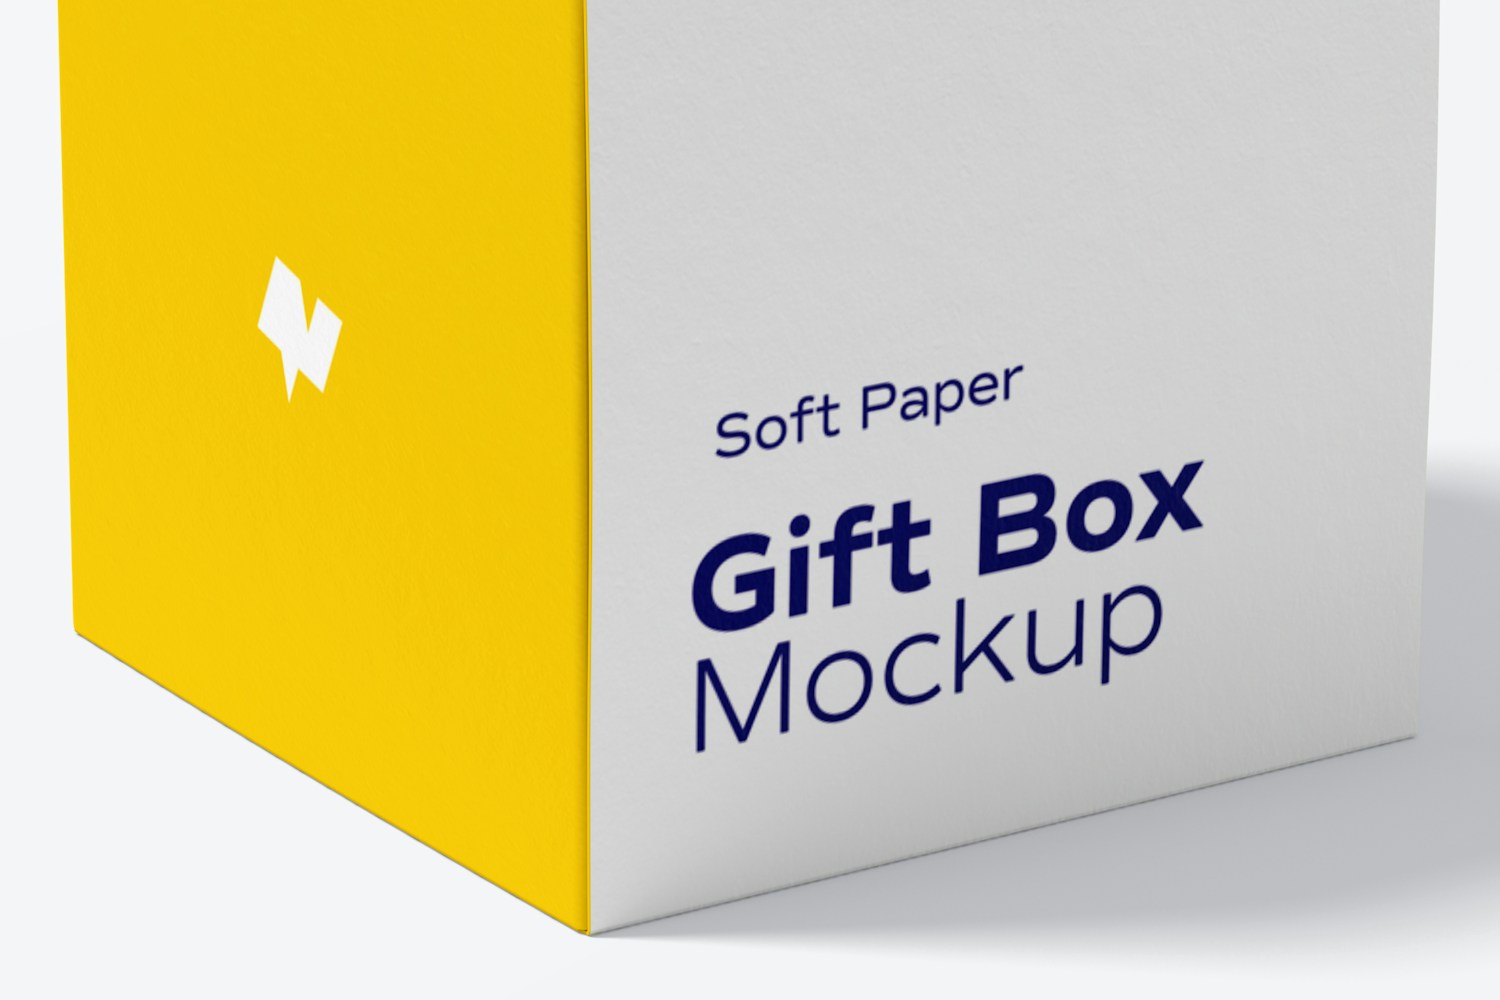 Soft Paper Gift Box Mockup